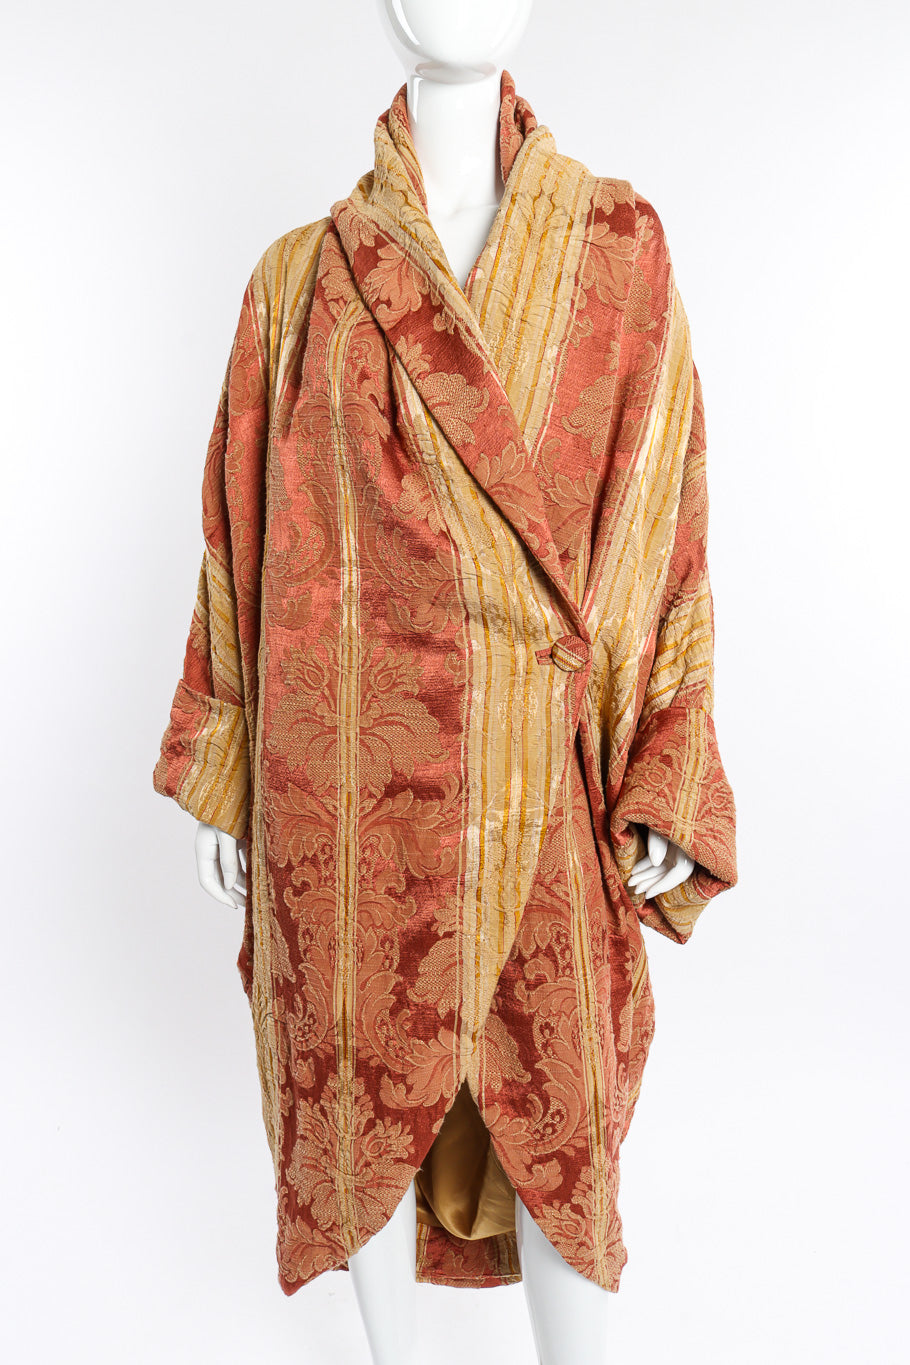 Vintage Les Habitudes Draped Brocade Cocoon Coat front on mannequin closeup @recessla